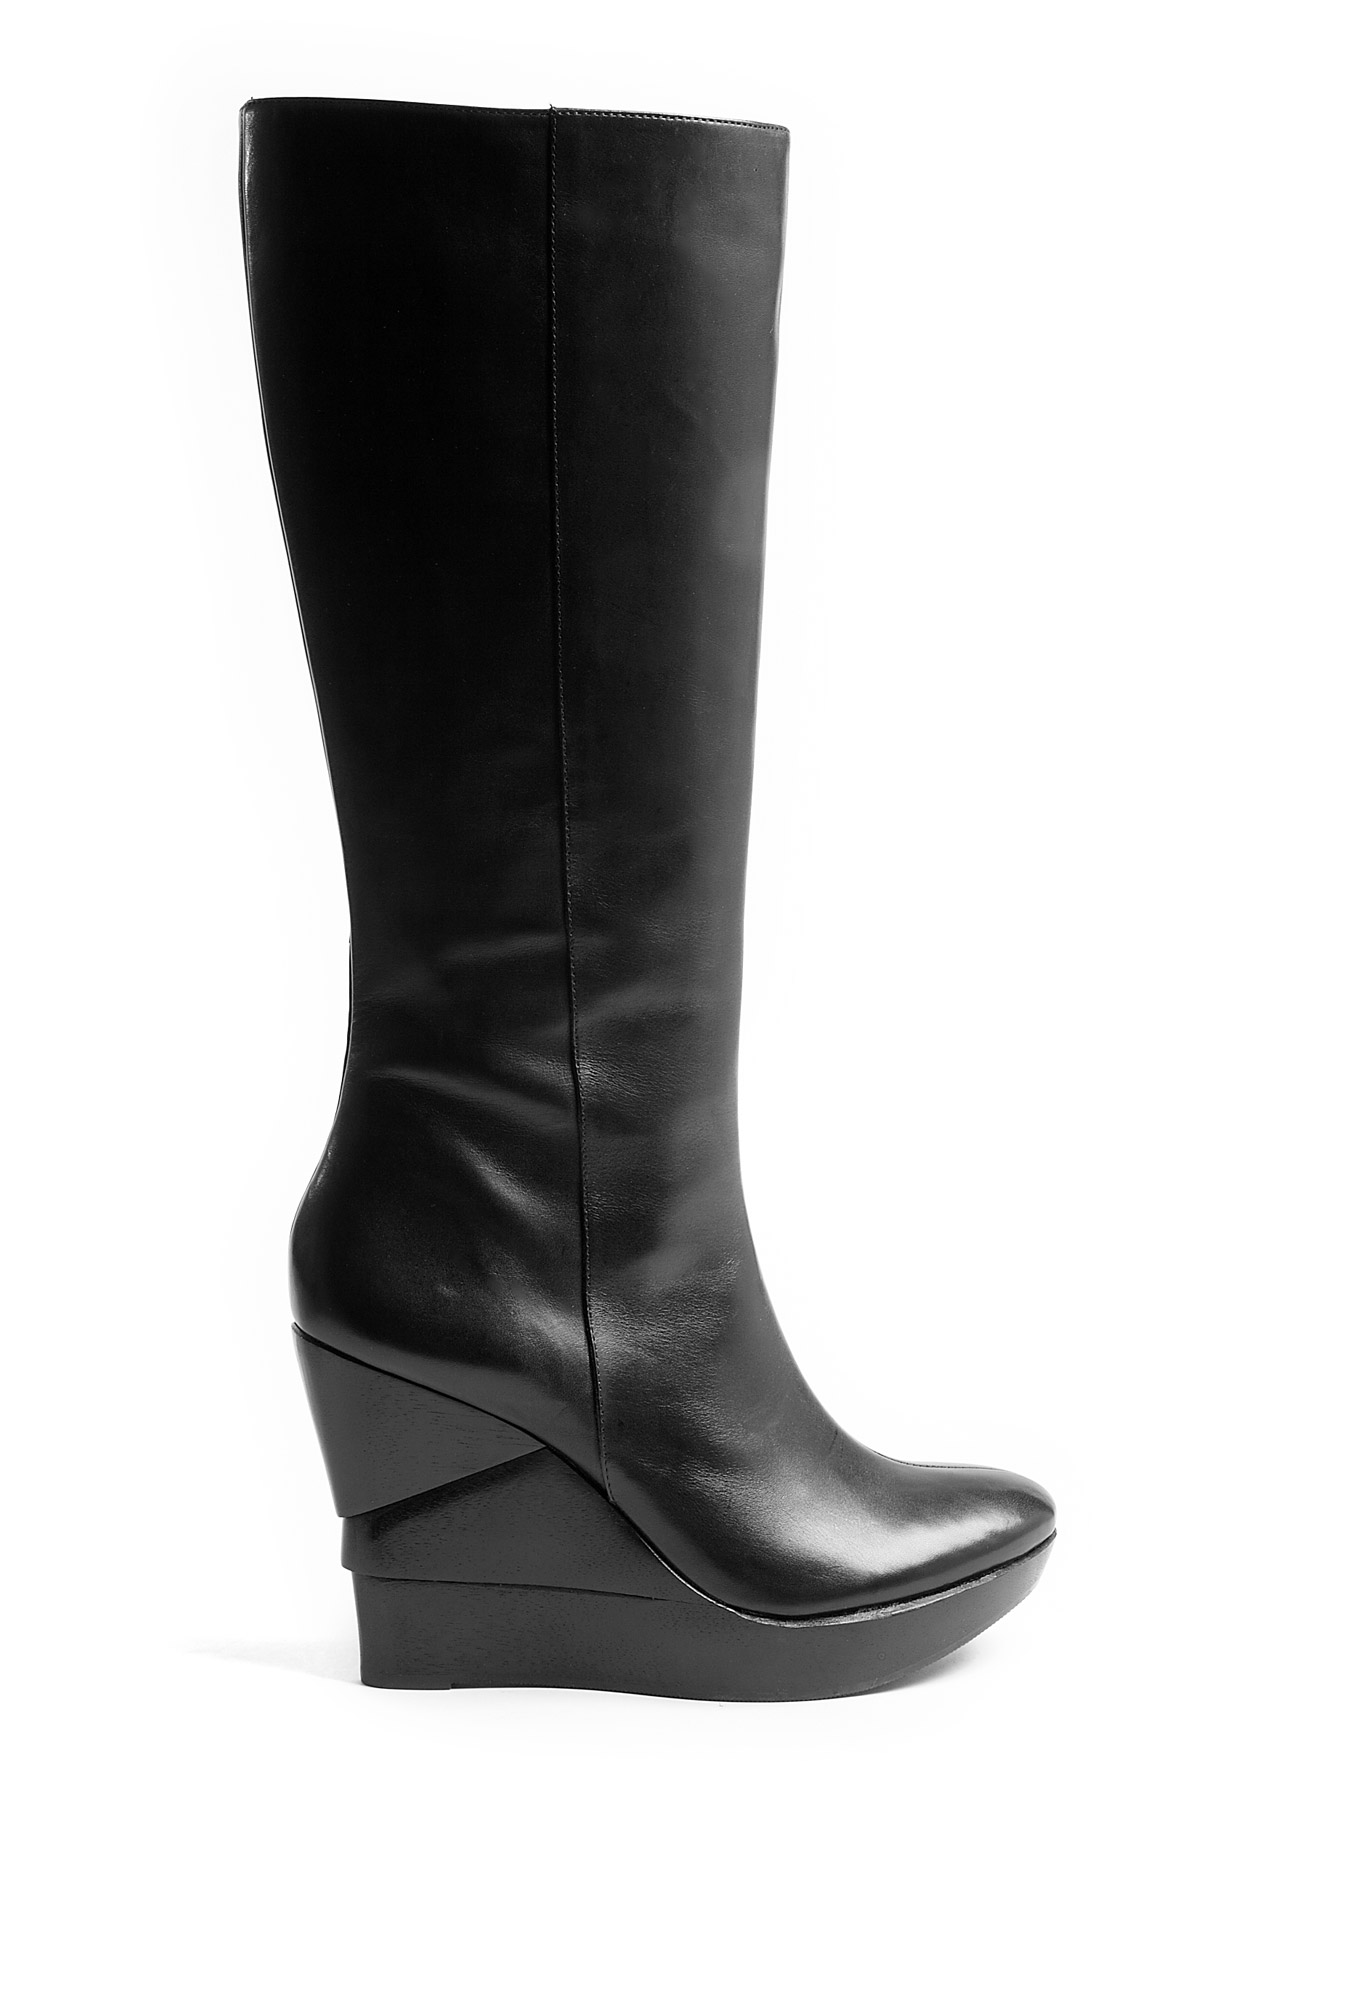 Diane Von Furstenberg Orion Leather Knee Length Boots in Black | Lyst